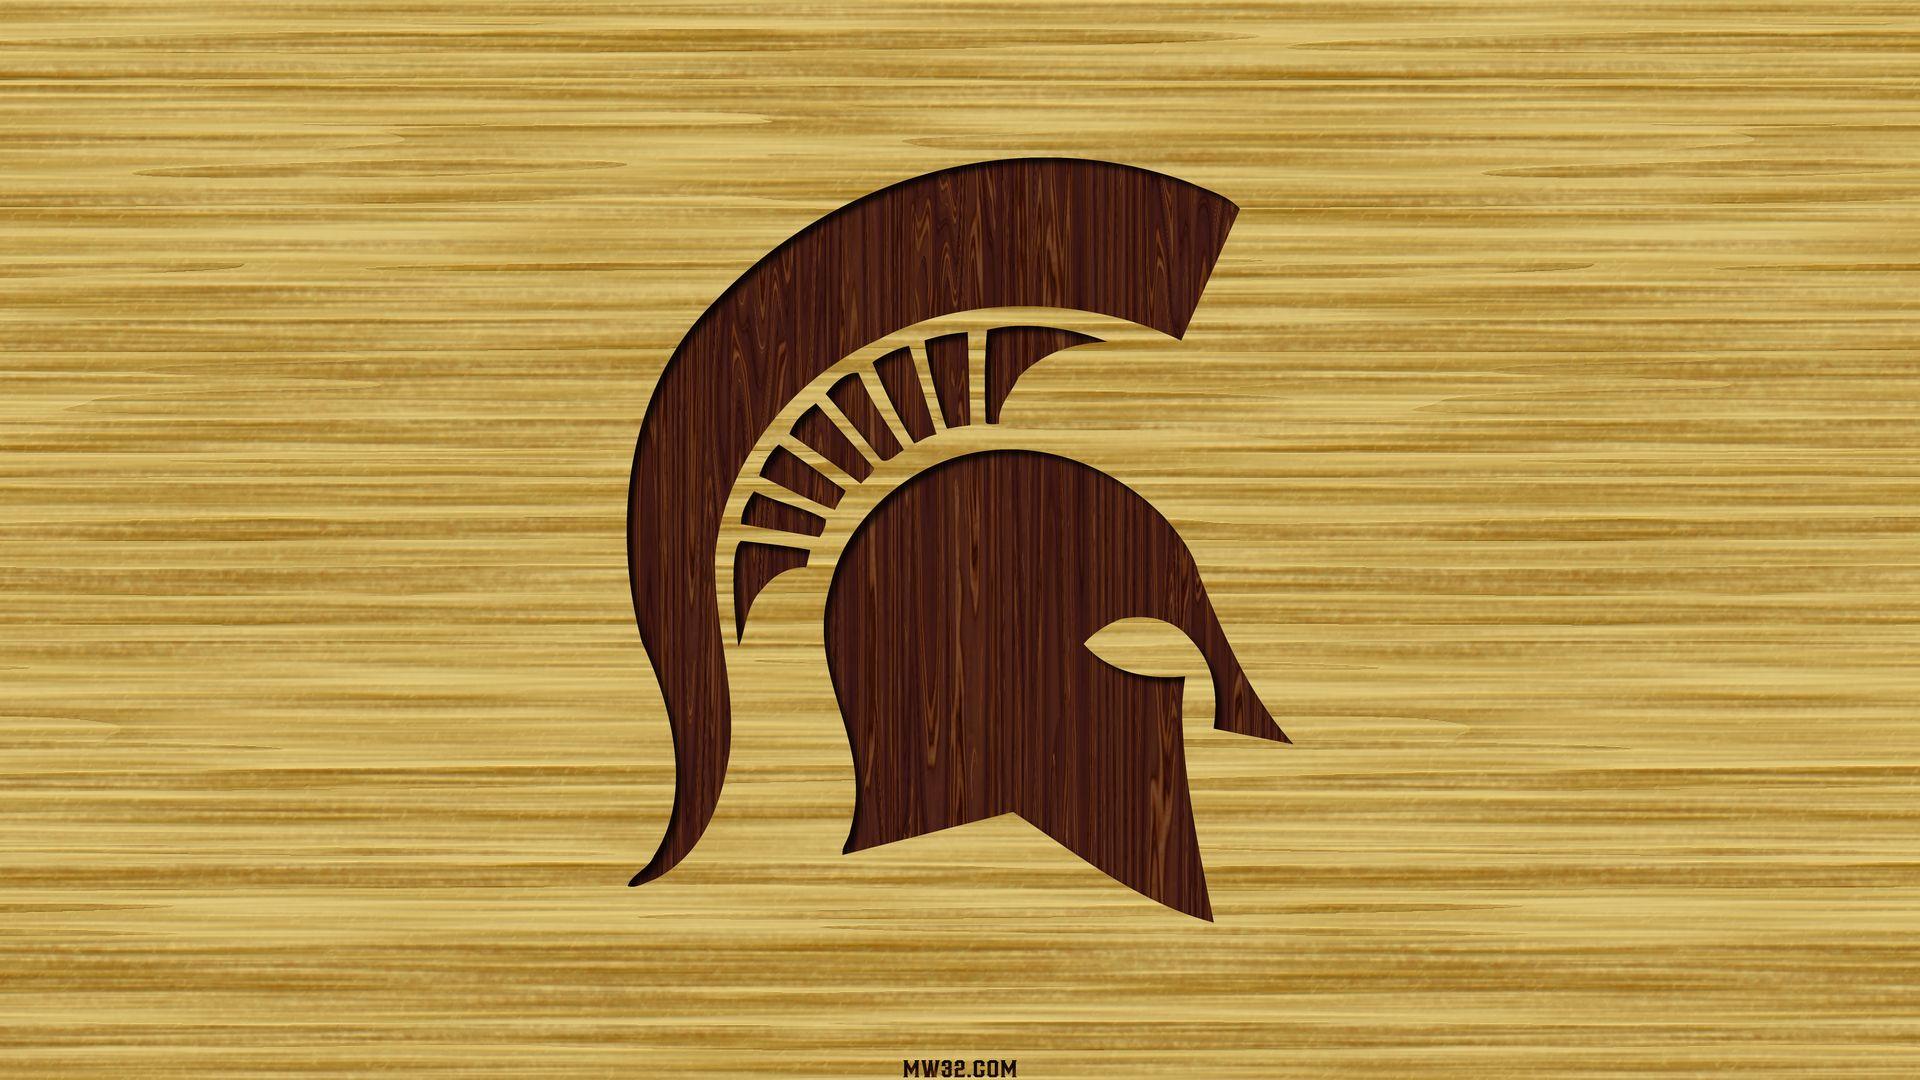 Michigan State Basketball Wallpaper